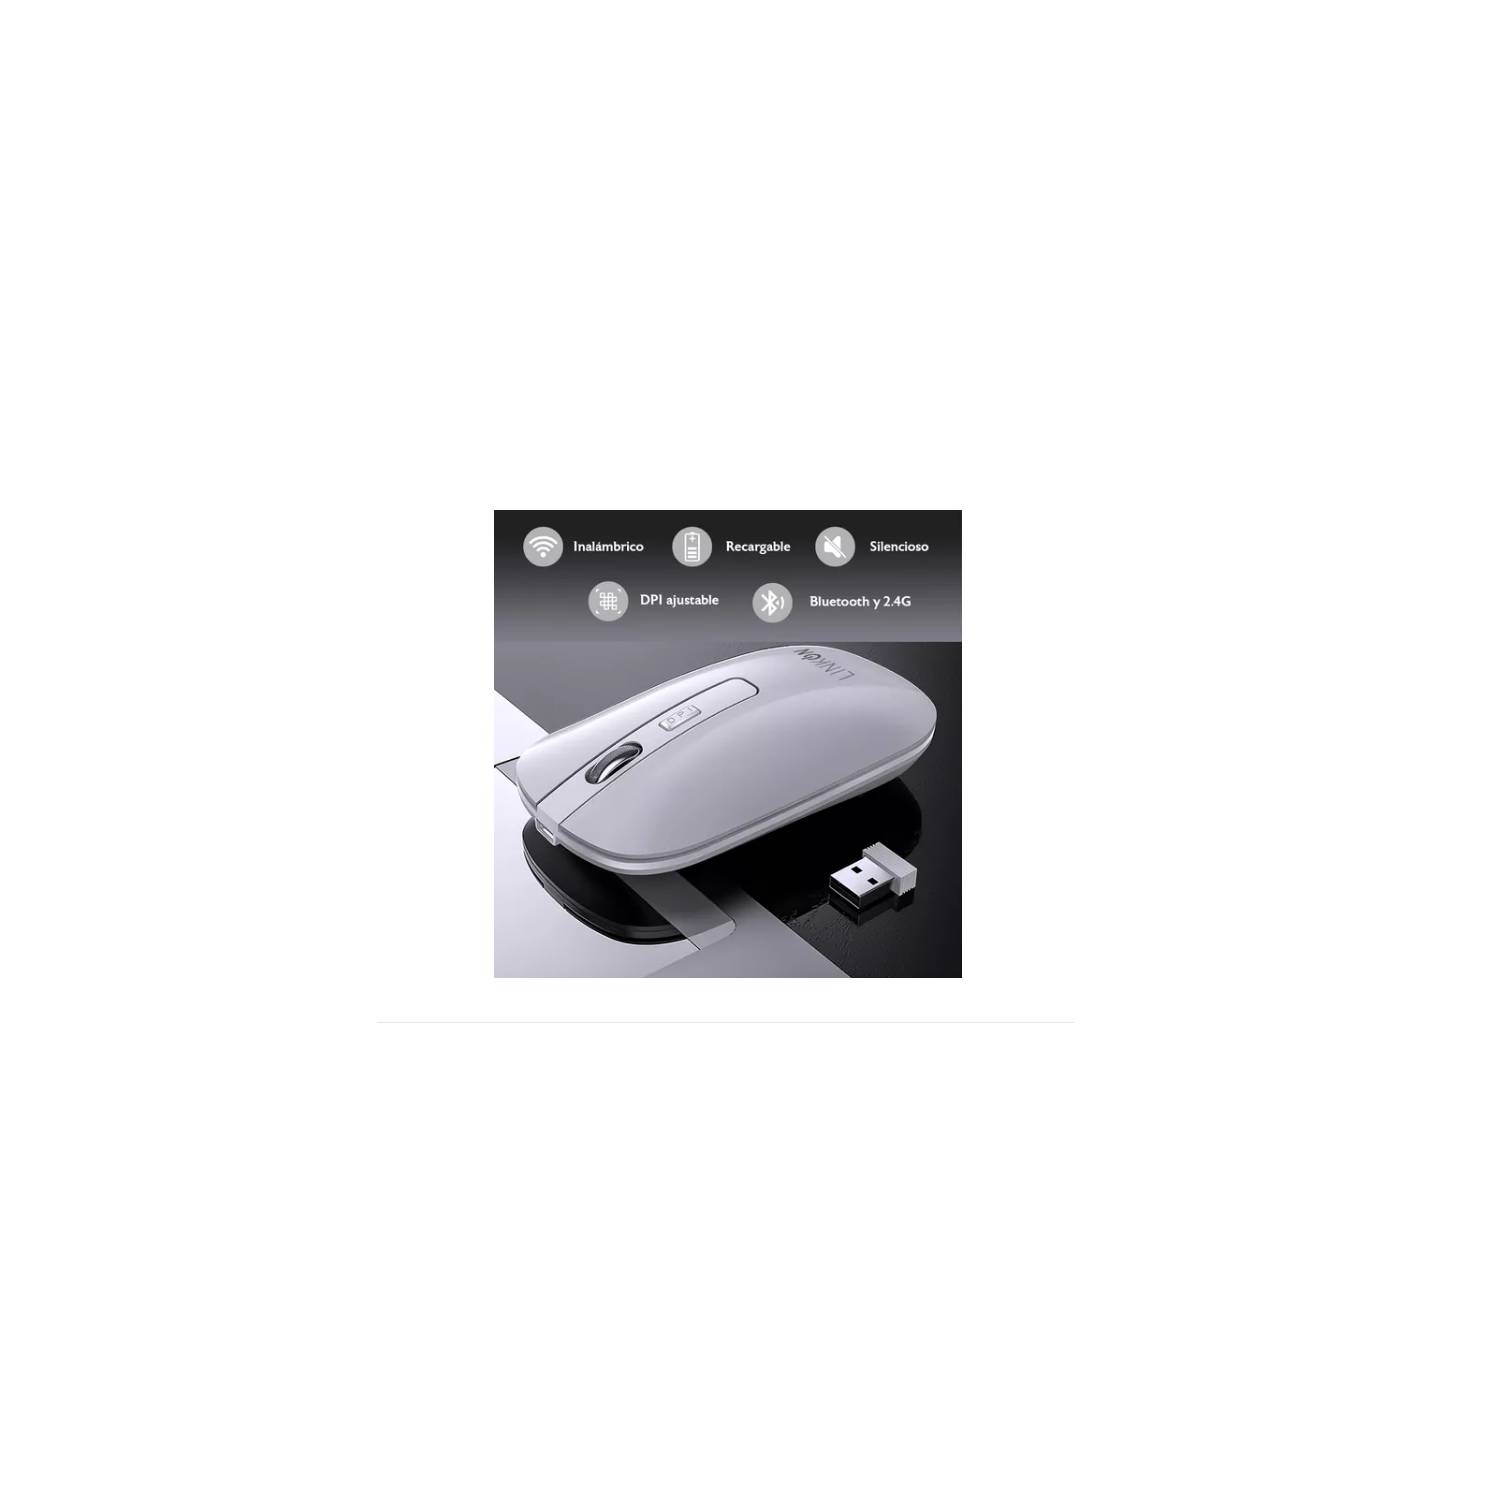 Mouse Bluetooth Recargable Dual Mode Inalambrico 24G GENERICO